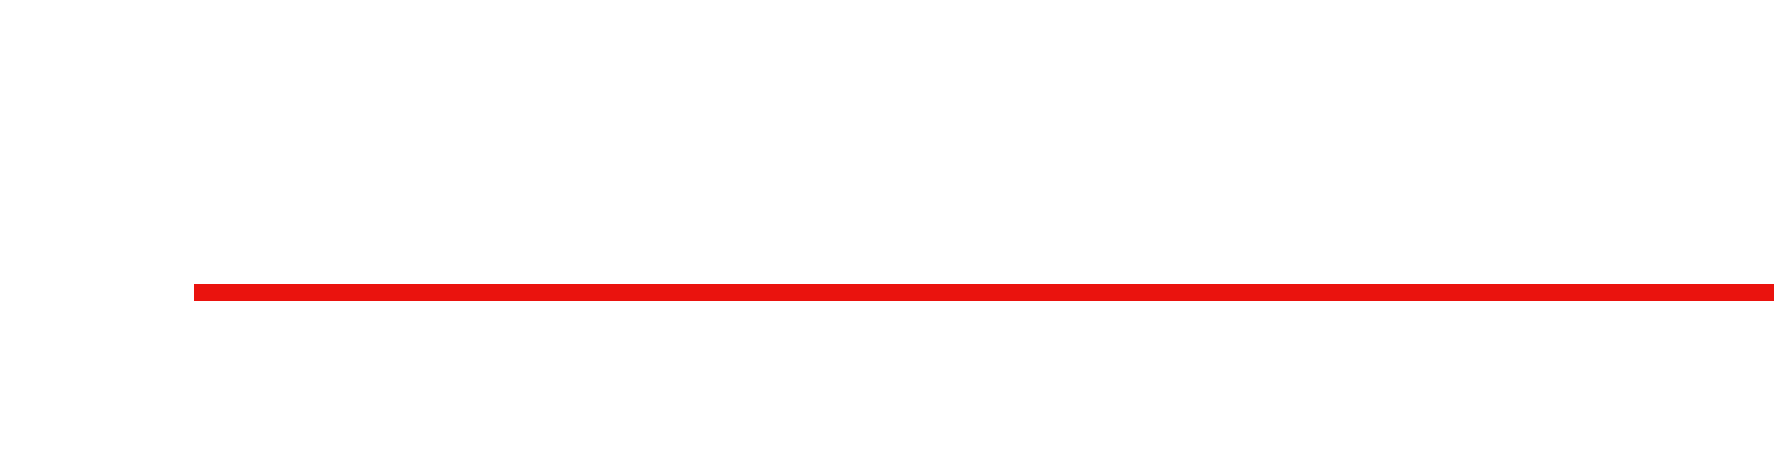 Harmon-logo-v2